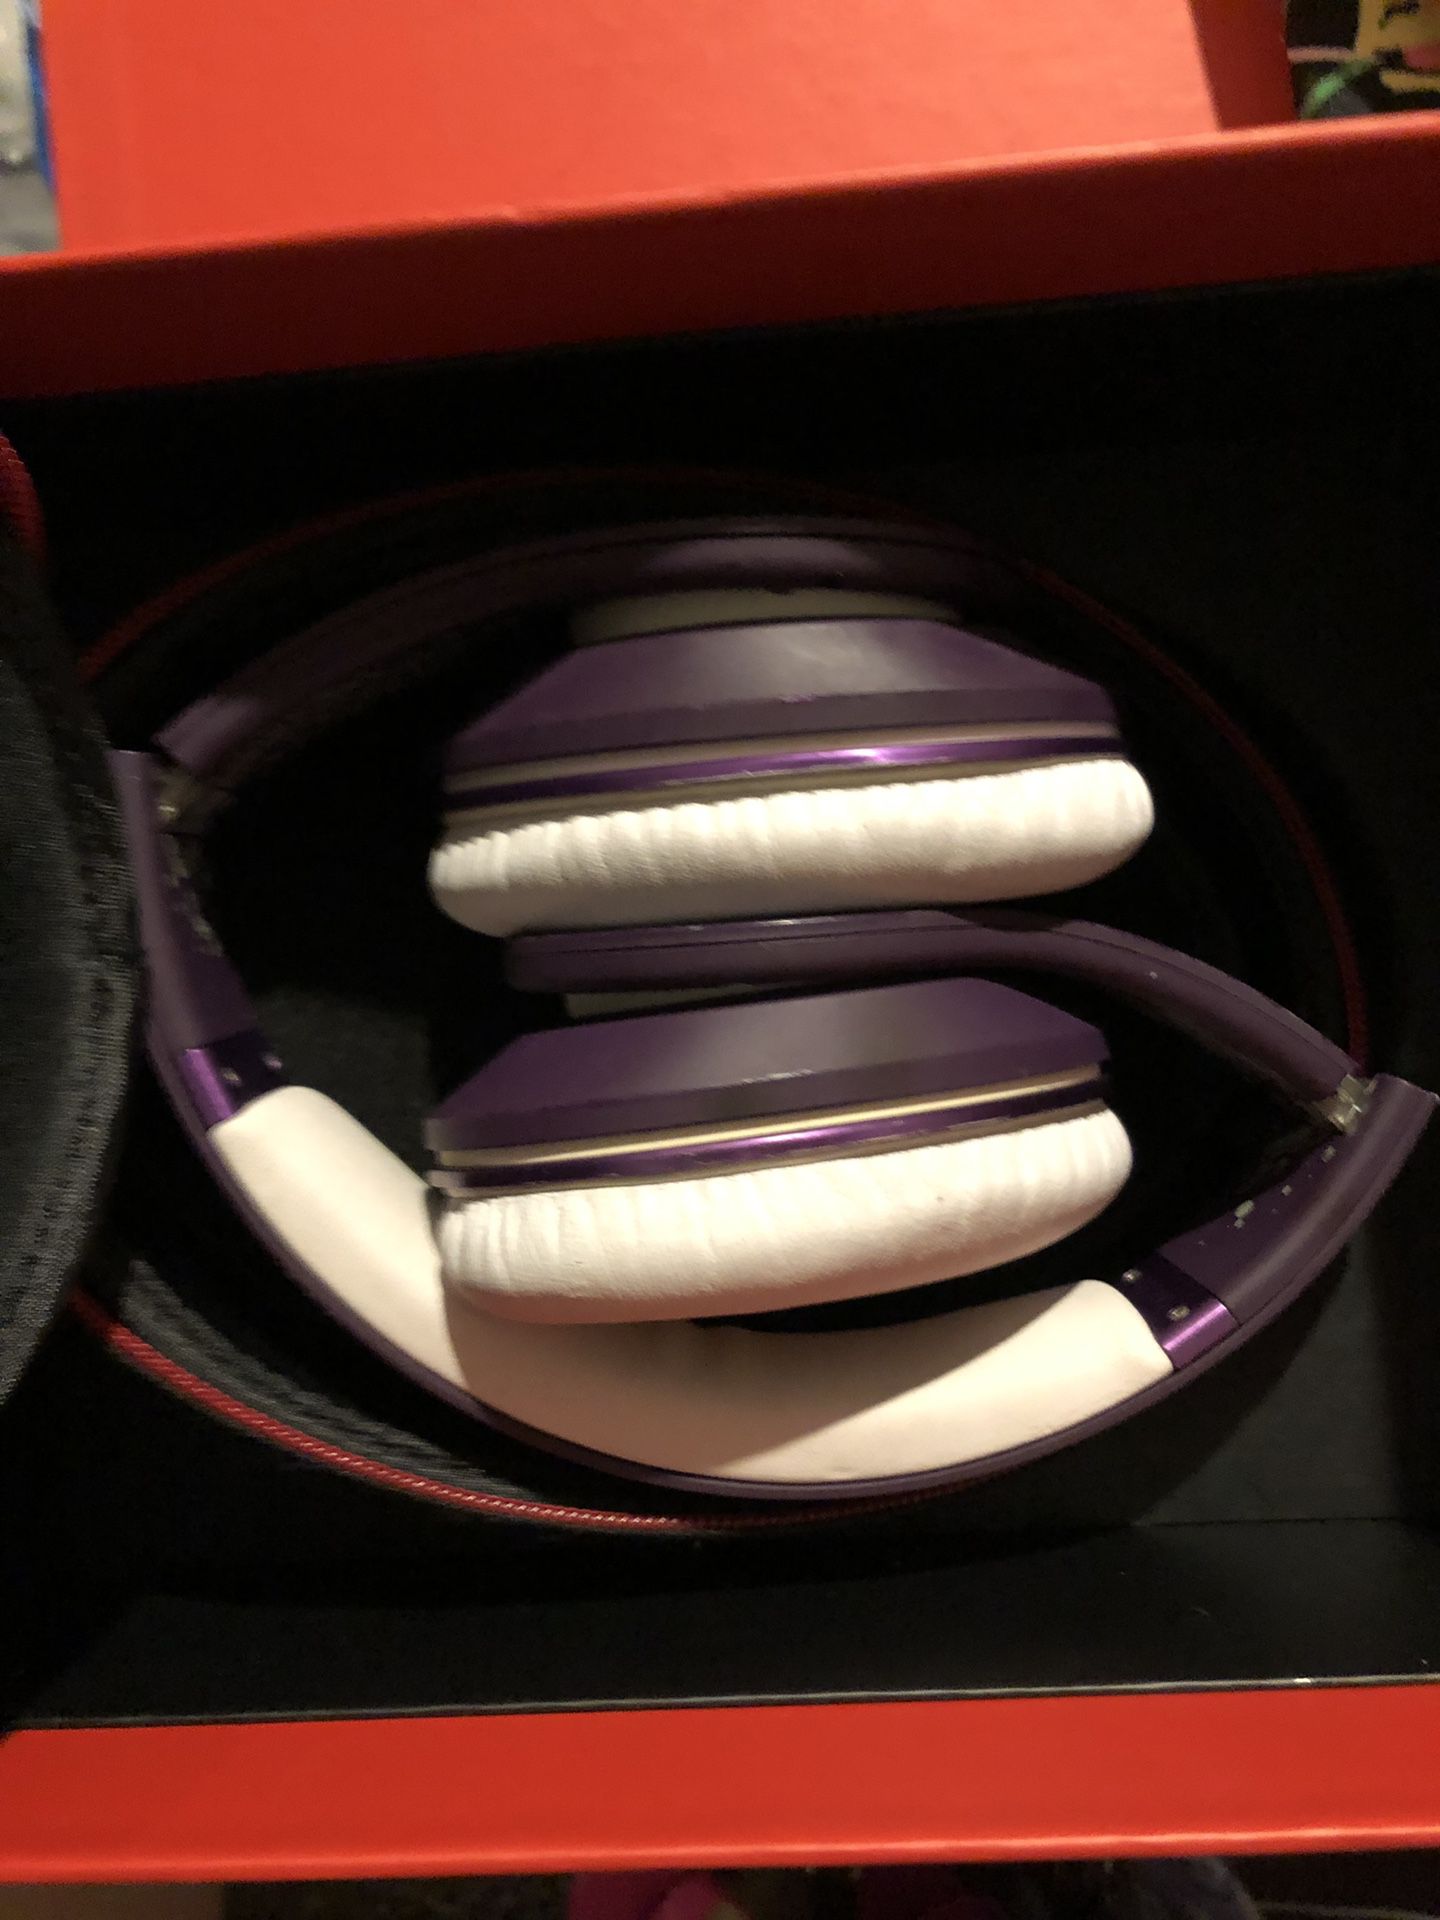 Purple Triple A battery operated Beats headphones